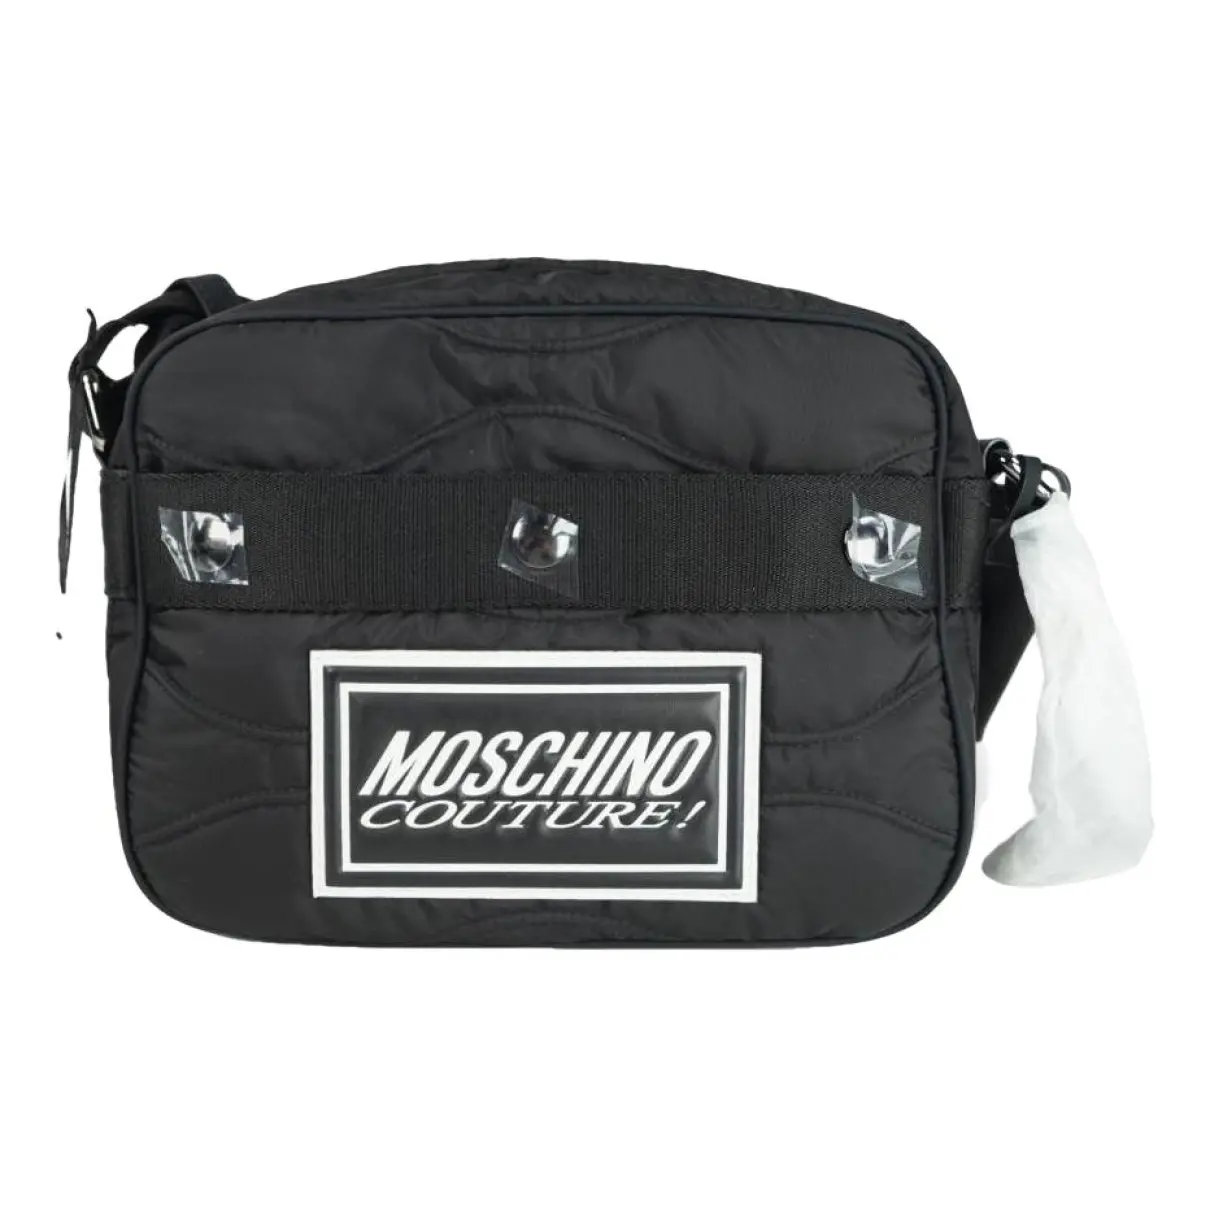 Crossbody bag Moschino